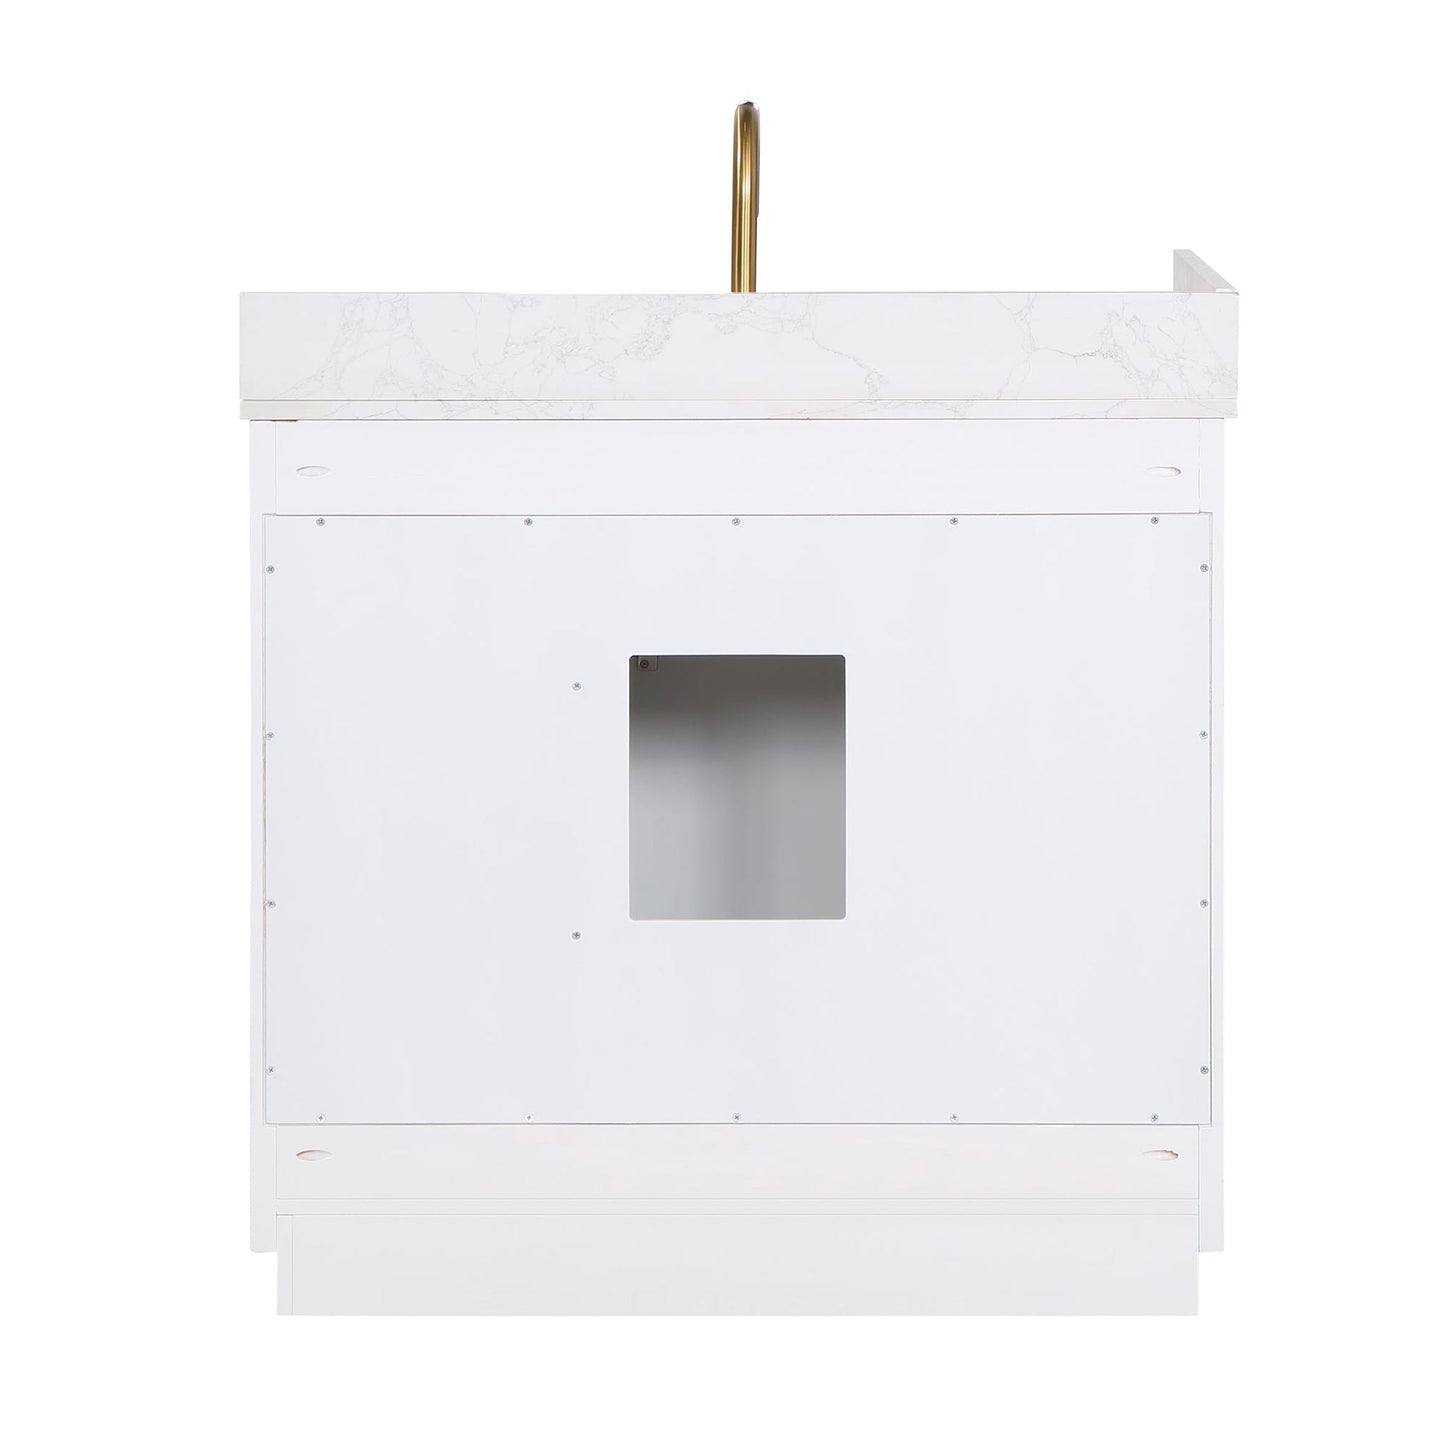 Altair Gavino 36" White Freestanding Single Bathroom Vanity Set With Mirror, Grain White Composite Stone Top, Single Rectangular Undermount Ceramic Sink, Overflow, Sidesplash, and Backsplash